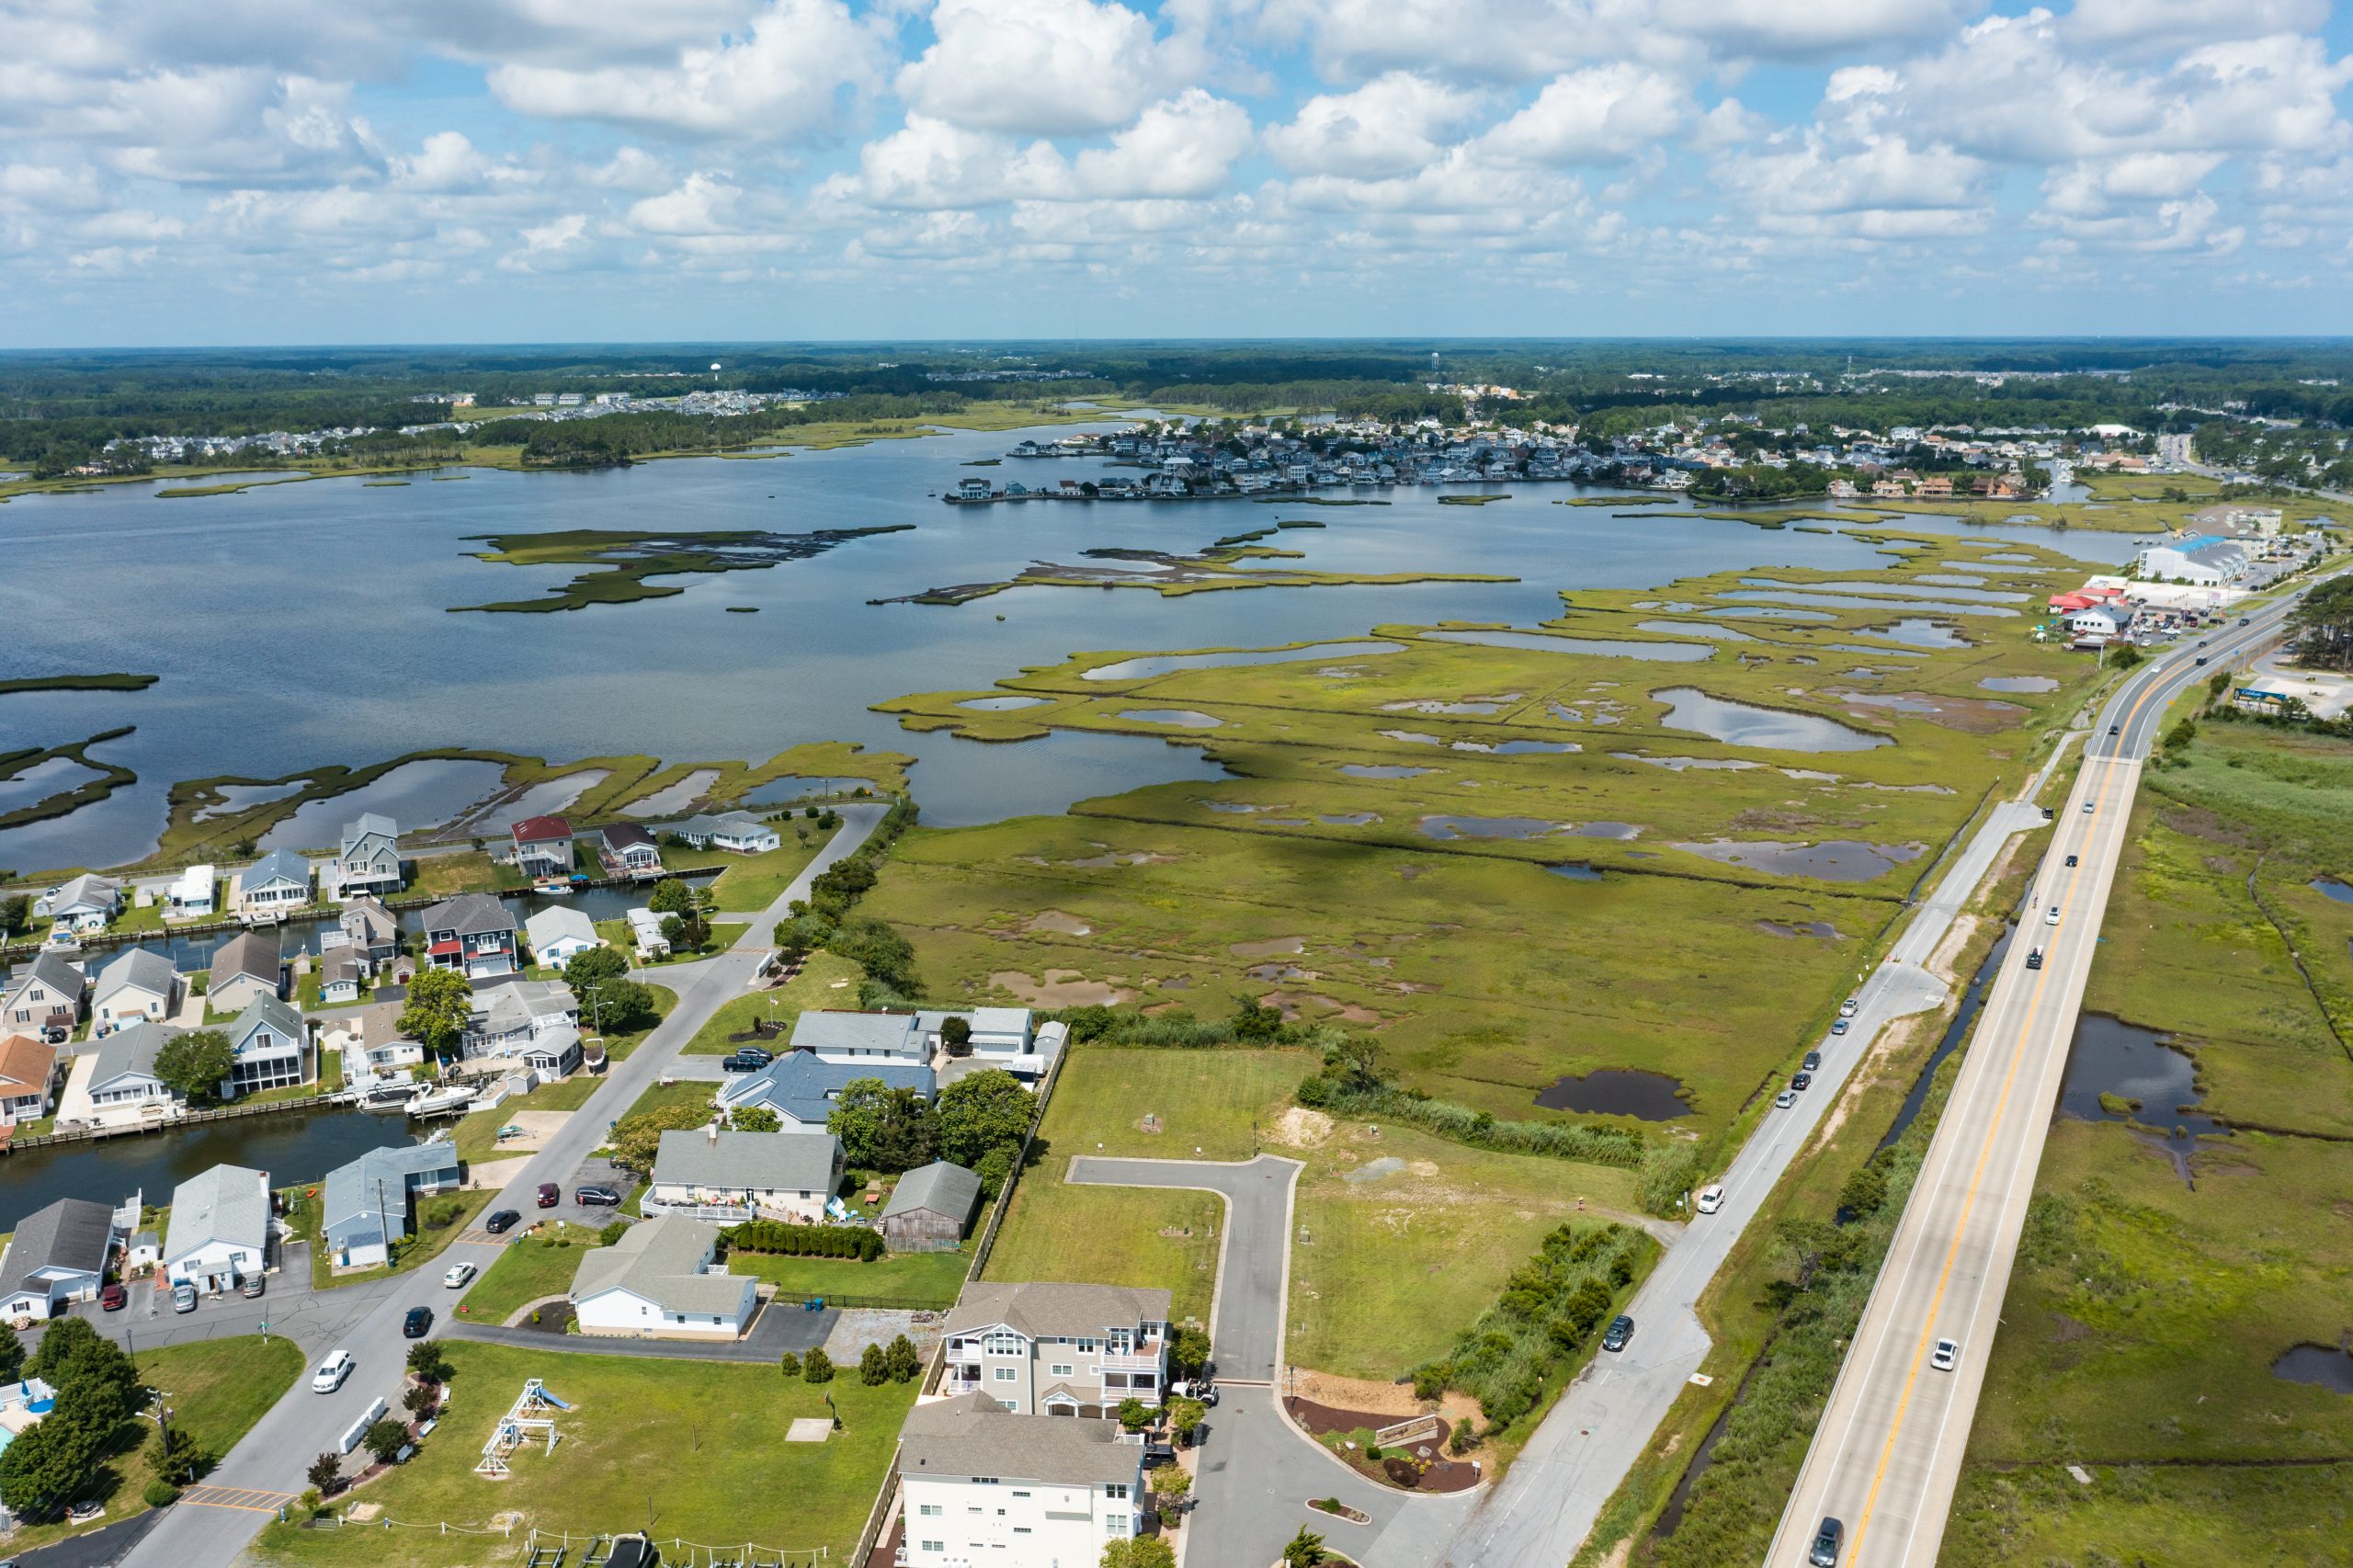 Aerial view of Verandah Bay in Fenwick Island, Delaware